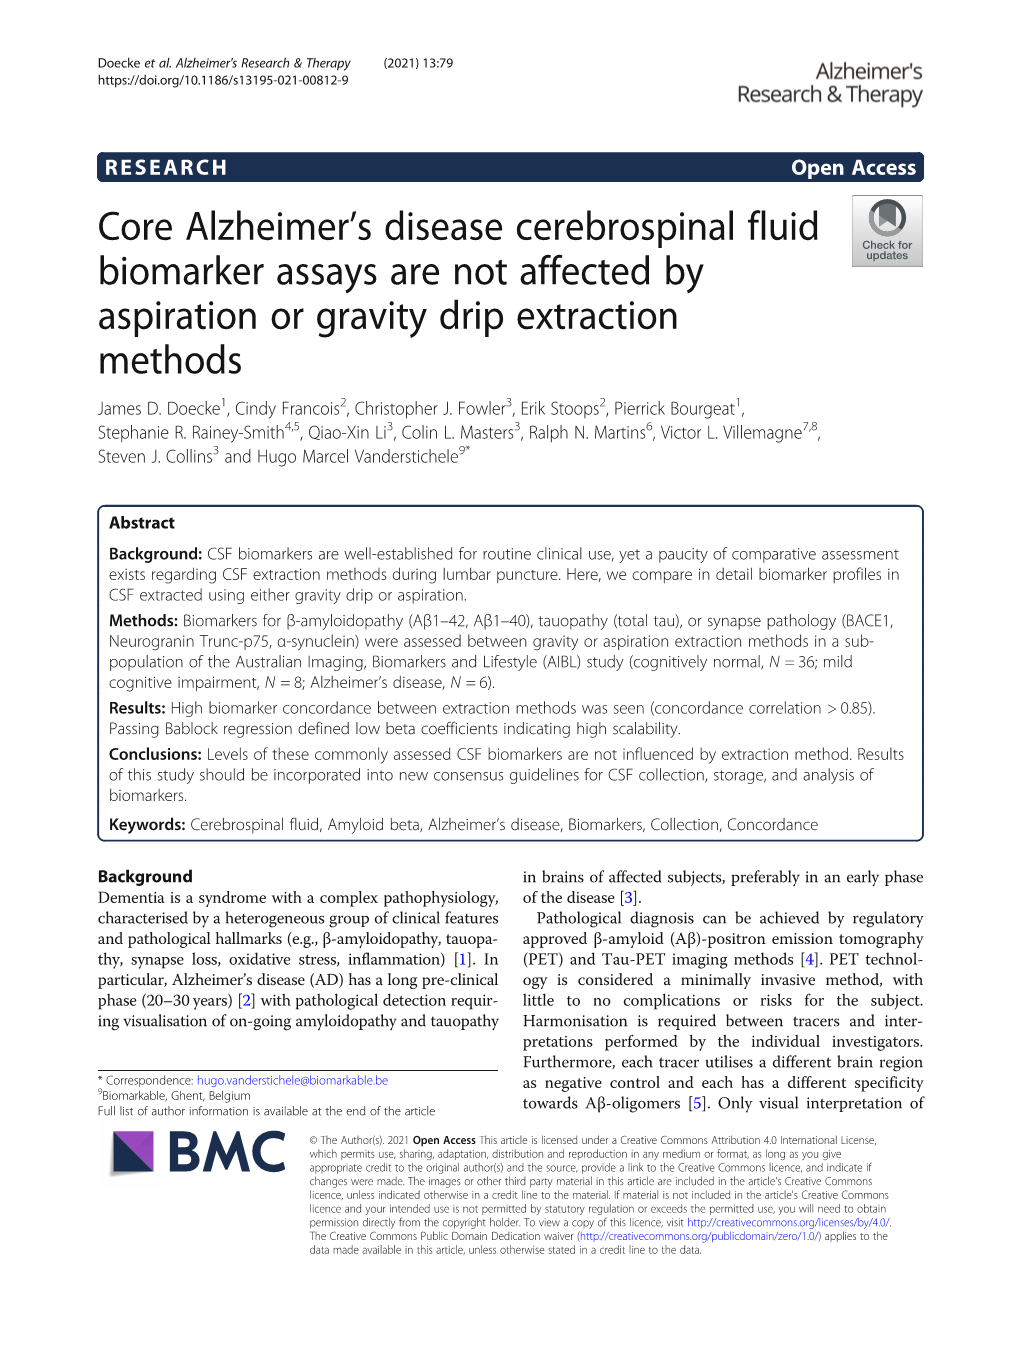 Core Alzheimer's Disease Cerebrospinal Fluid Biomarker